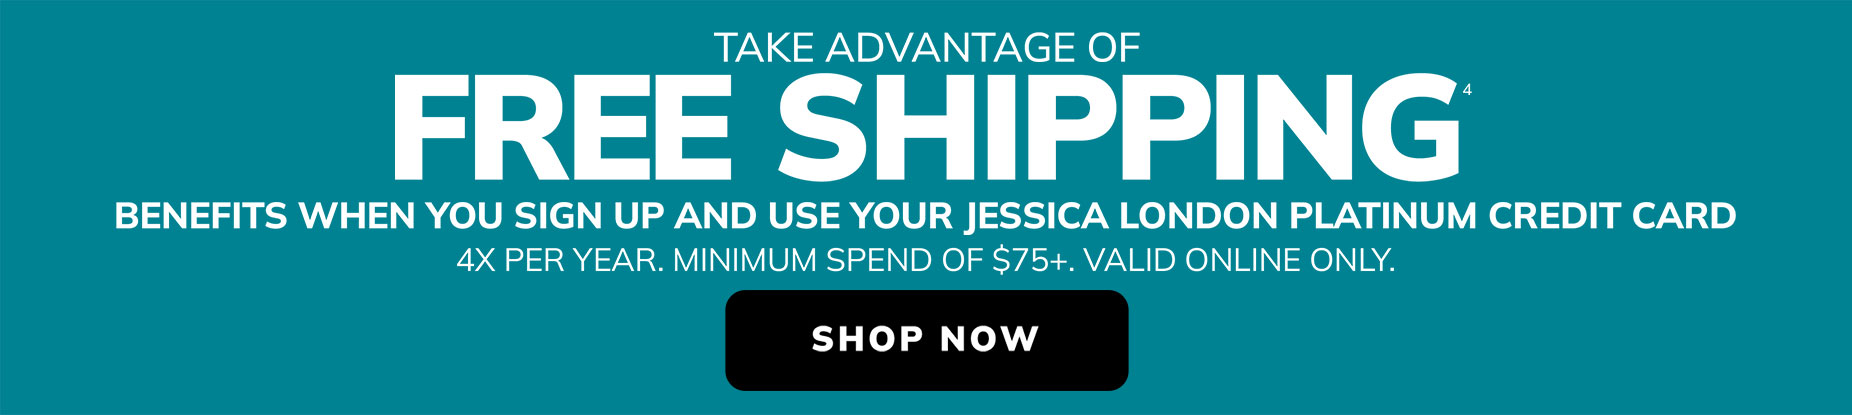 Jessica London Platinum Credit Card - Free shipping